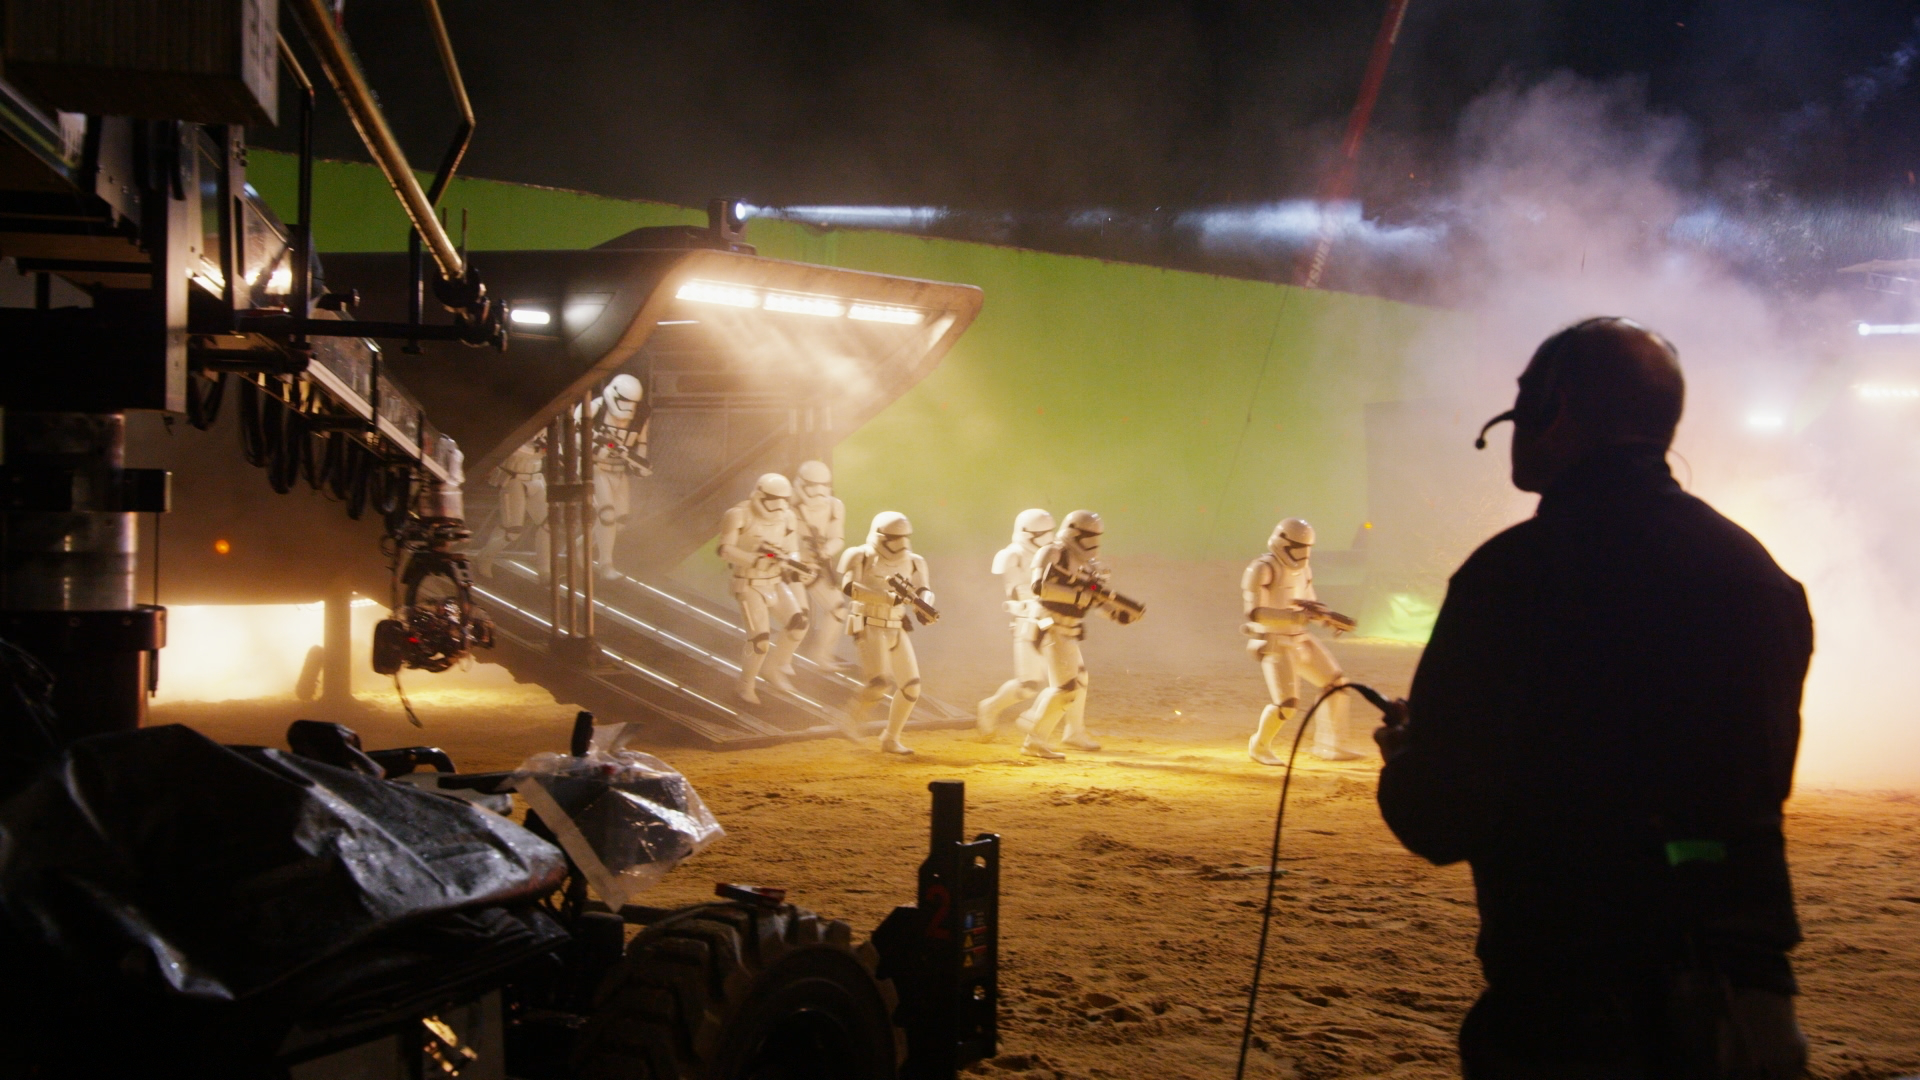 TFA BTS SXSW 2 Star Wars: The Force Awakens Documentary Coming To SXSW